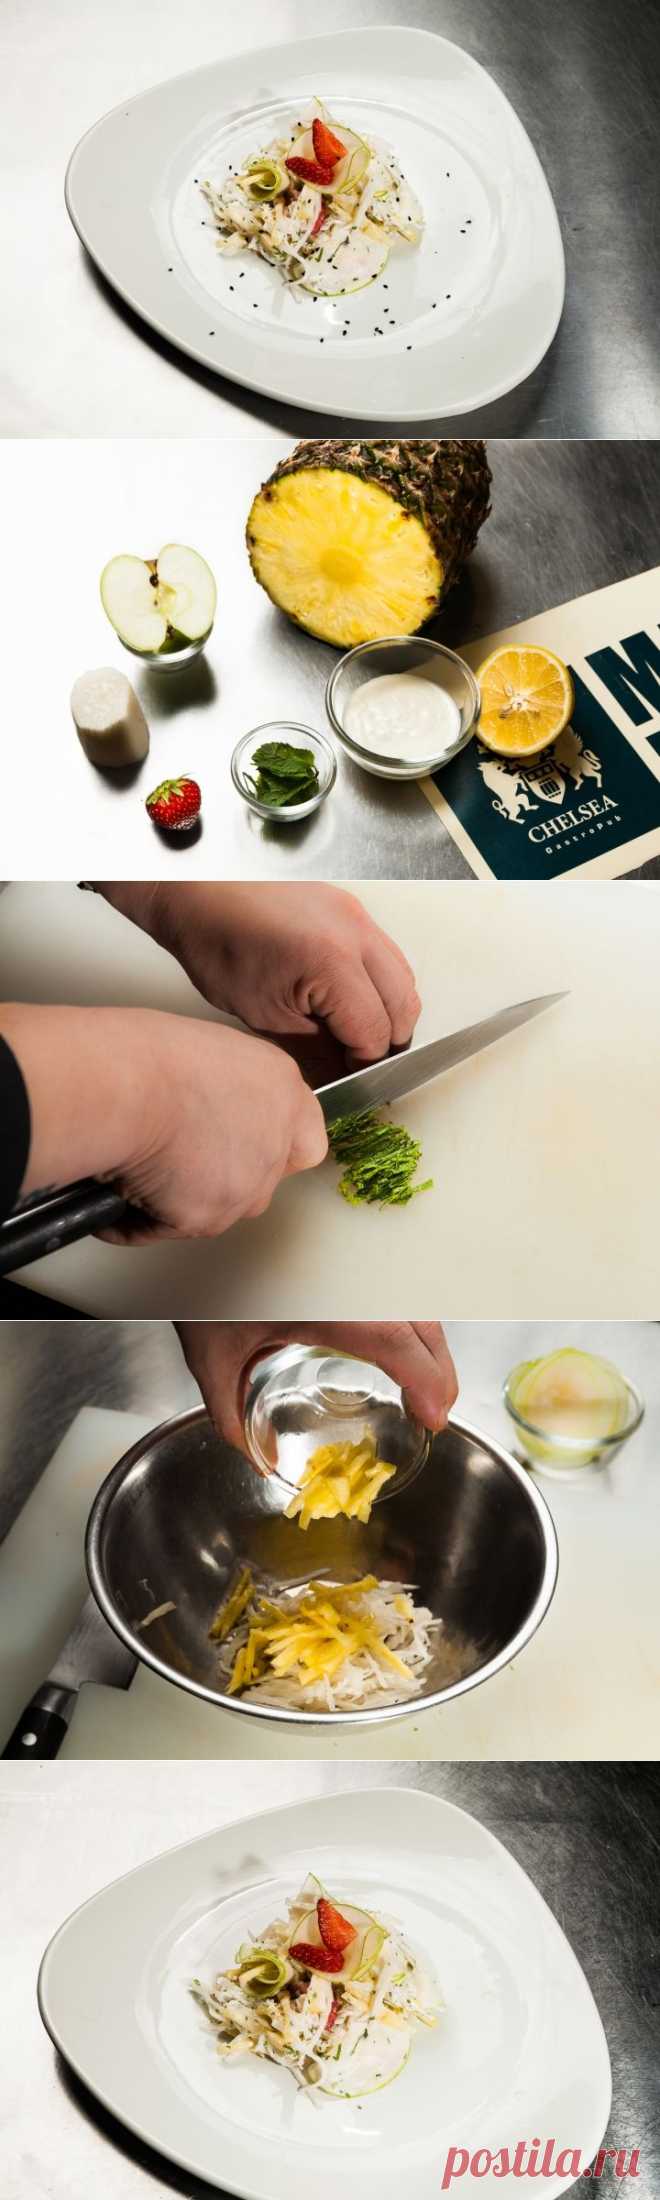 Салат с яблоком рецепт: как приготовить - рецепт приготовления, фото и состав | Леди@Mail.Ru